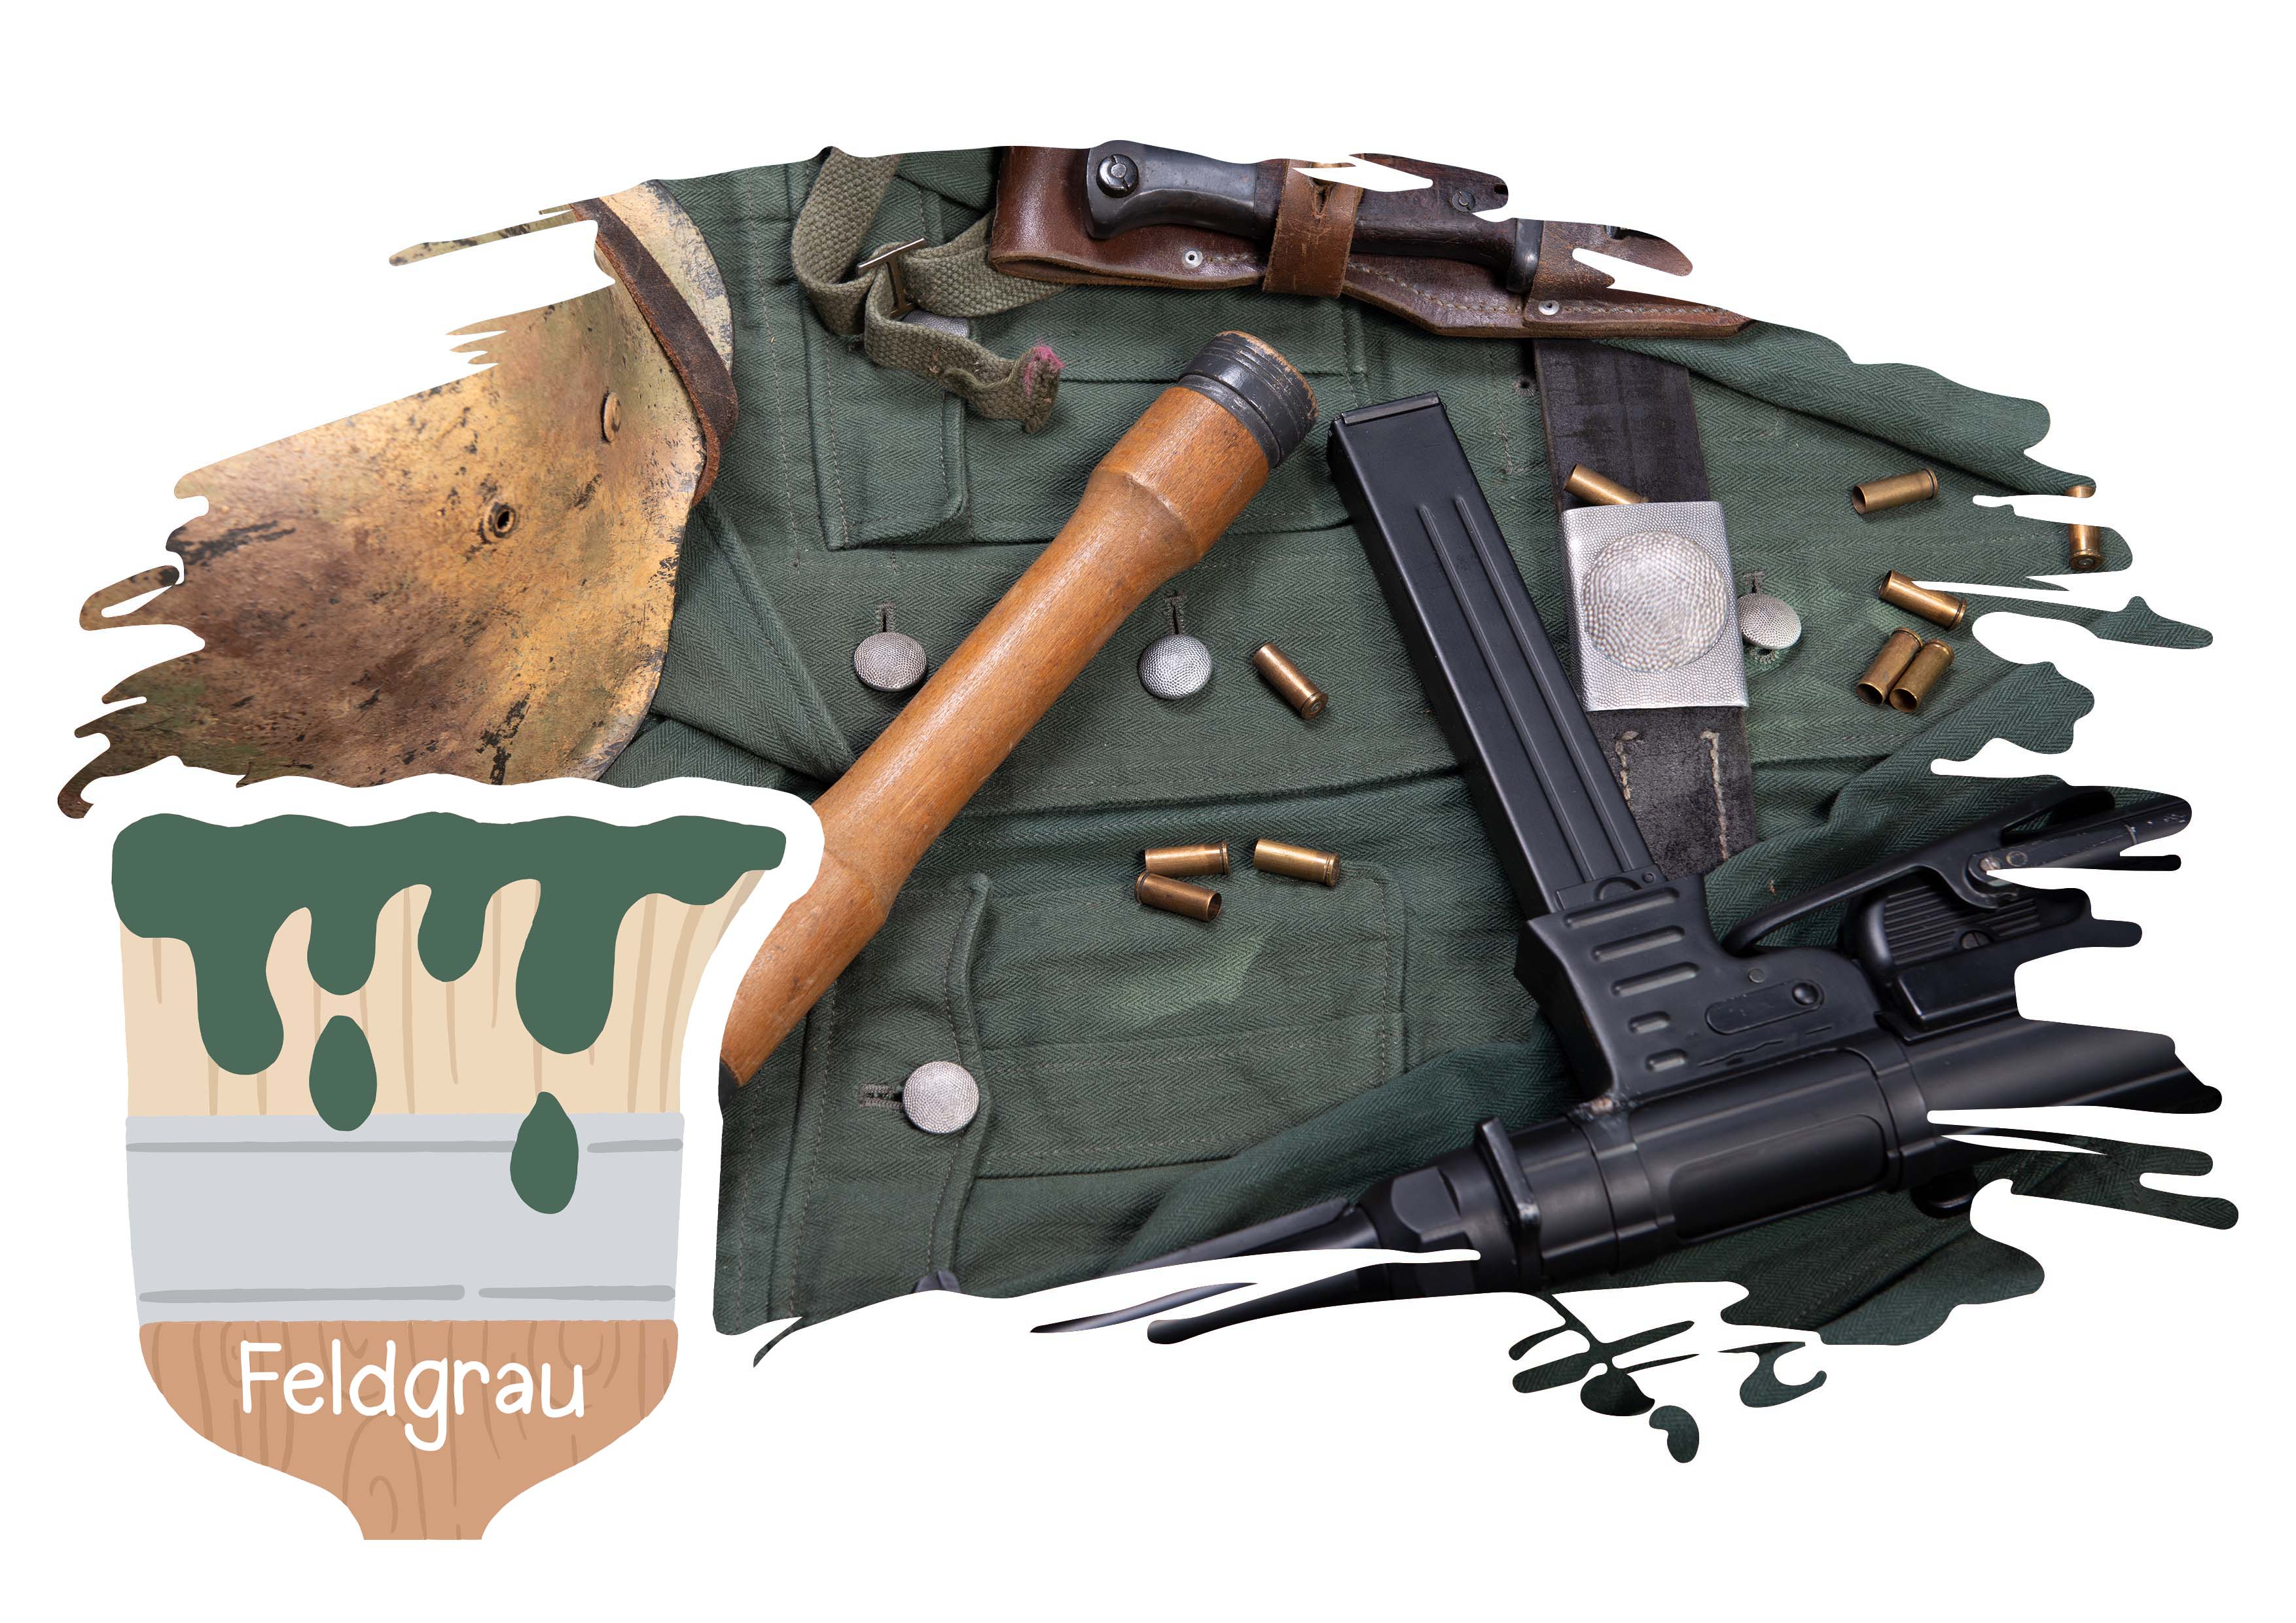 Feldgrau, WW2 german army field equipment with jacket, helmet and machine gun